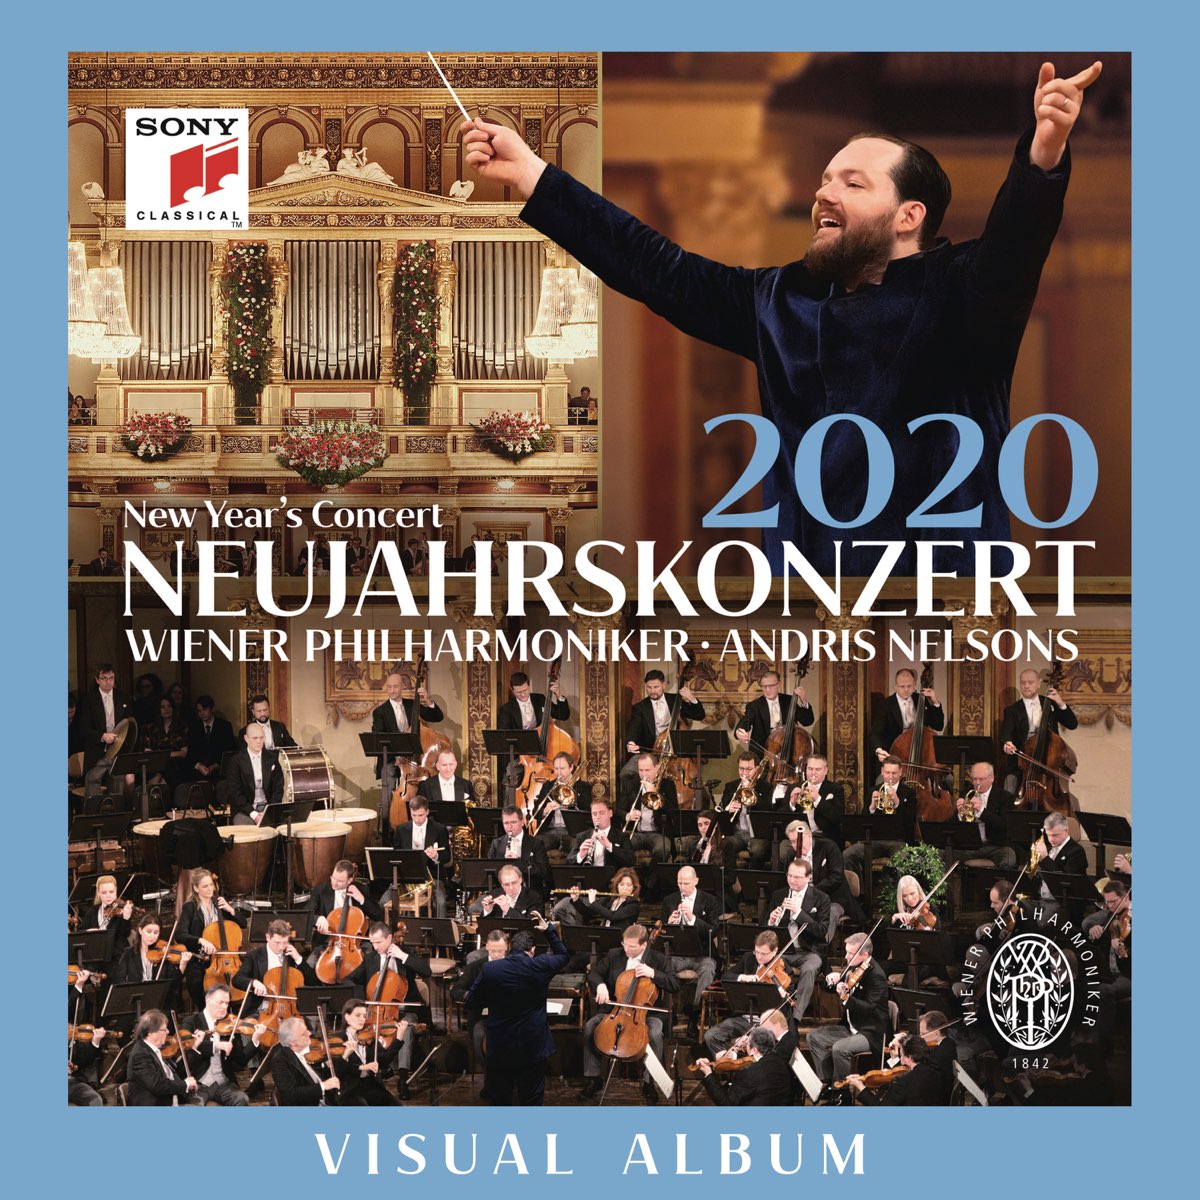 Neujahrskonzert 2020 / New Year's Concert 2020 / Concert du Nouvel An 2020  - Album by Andris Nelsons & Vienna Philharmonic - Apple Music